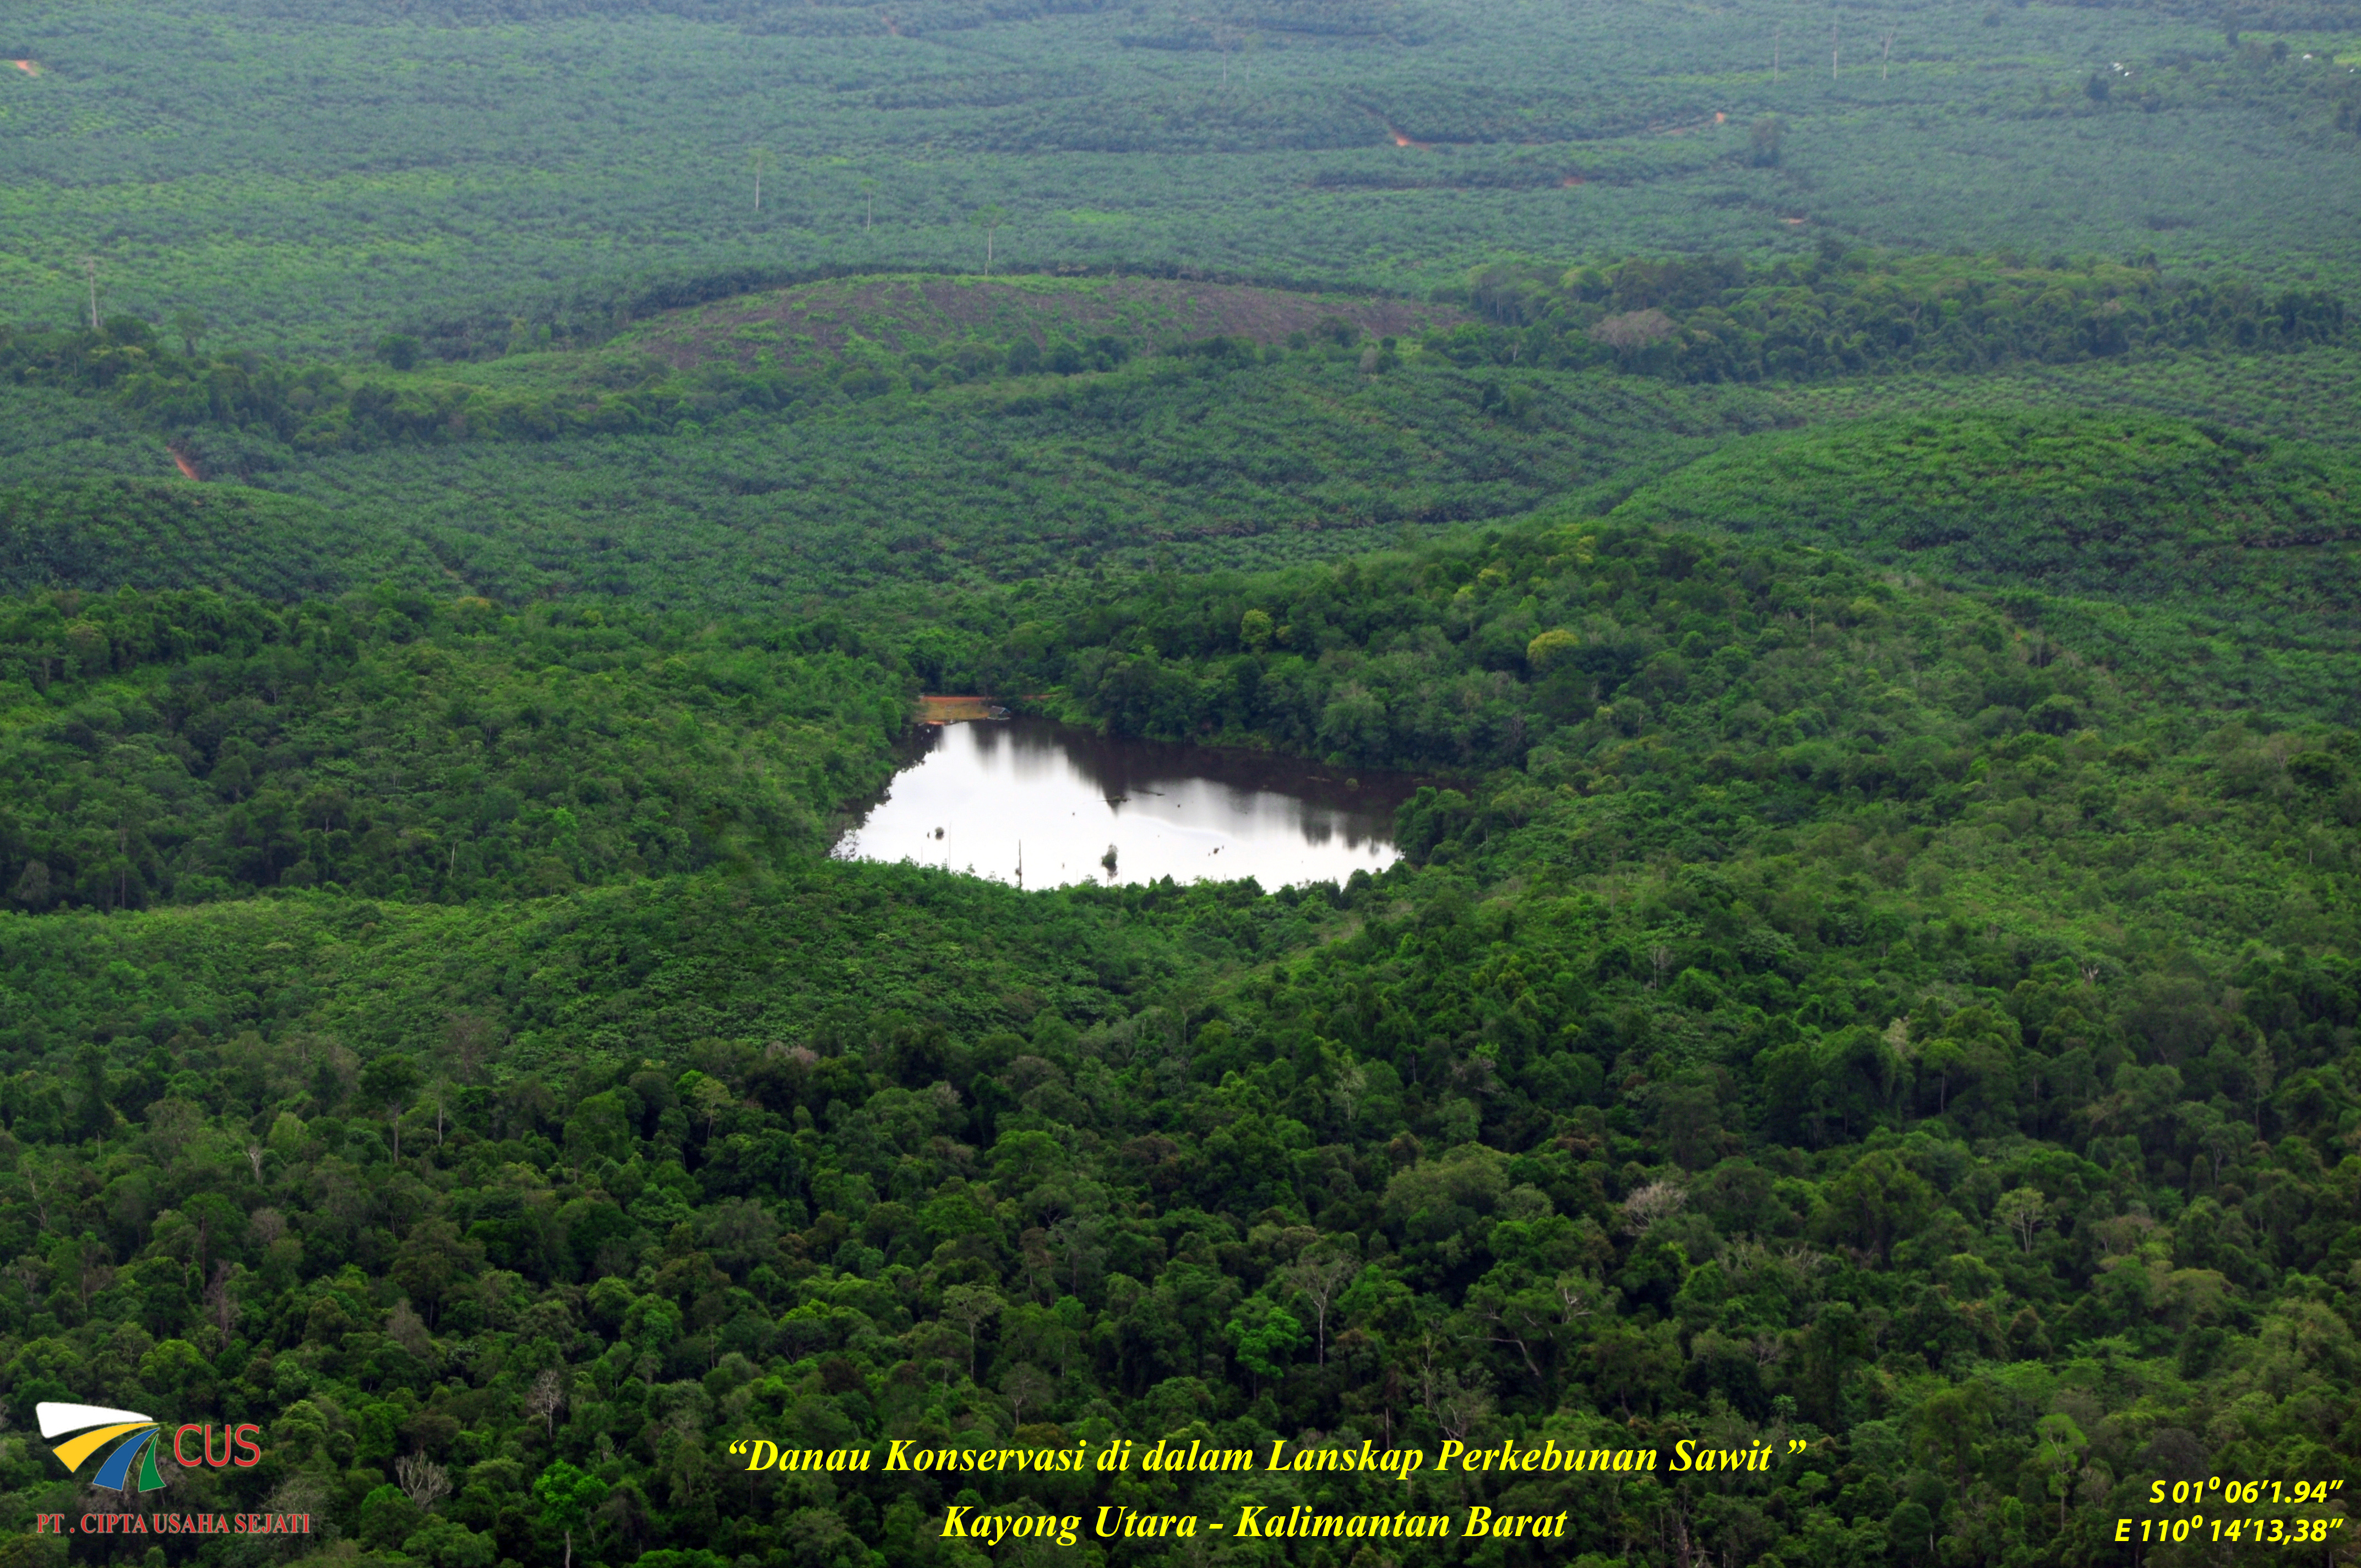 Danau Konservasi di dalam Lanskap Perkebunan Sawit, Kayong Utara - Kalimantan Barat